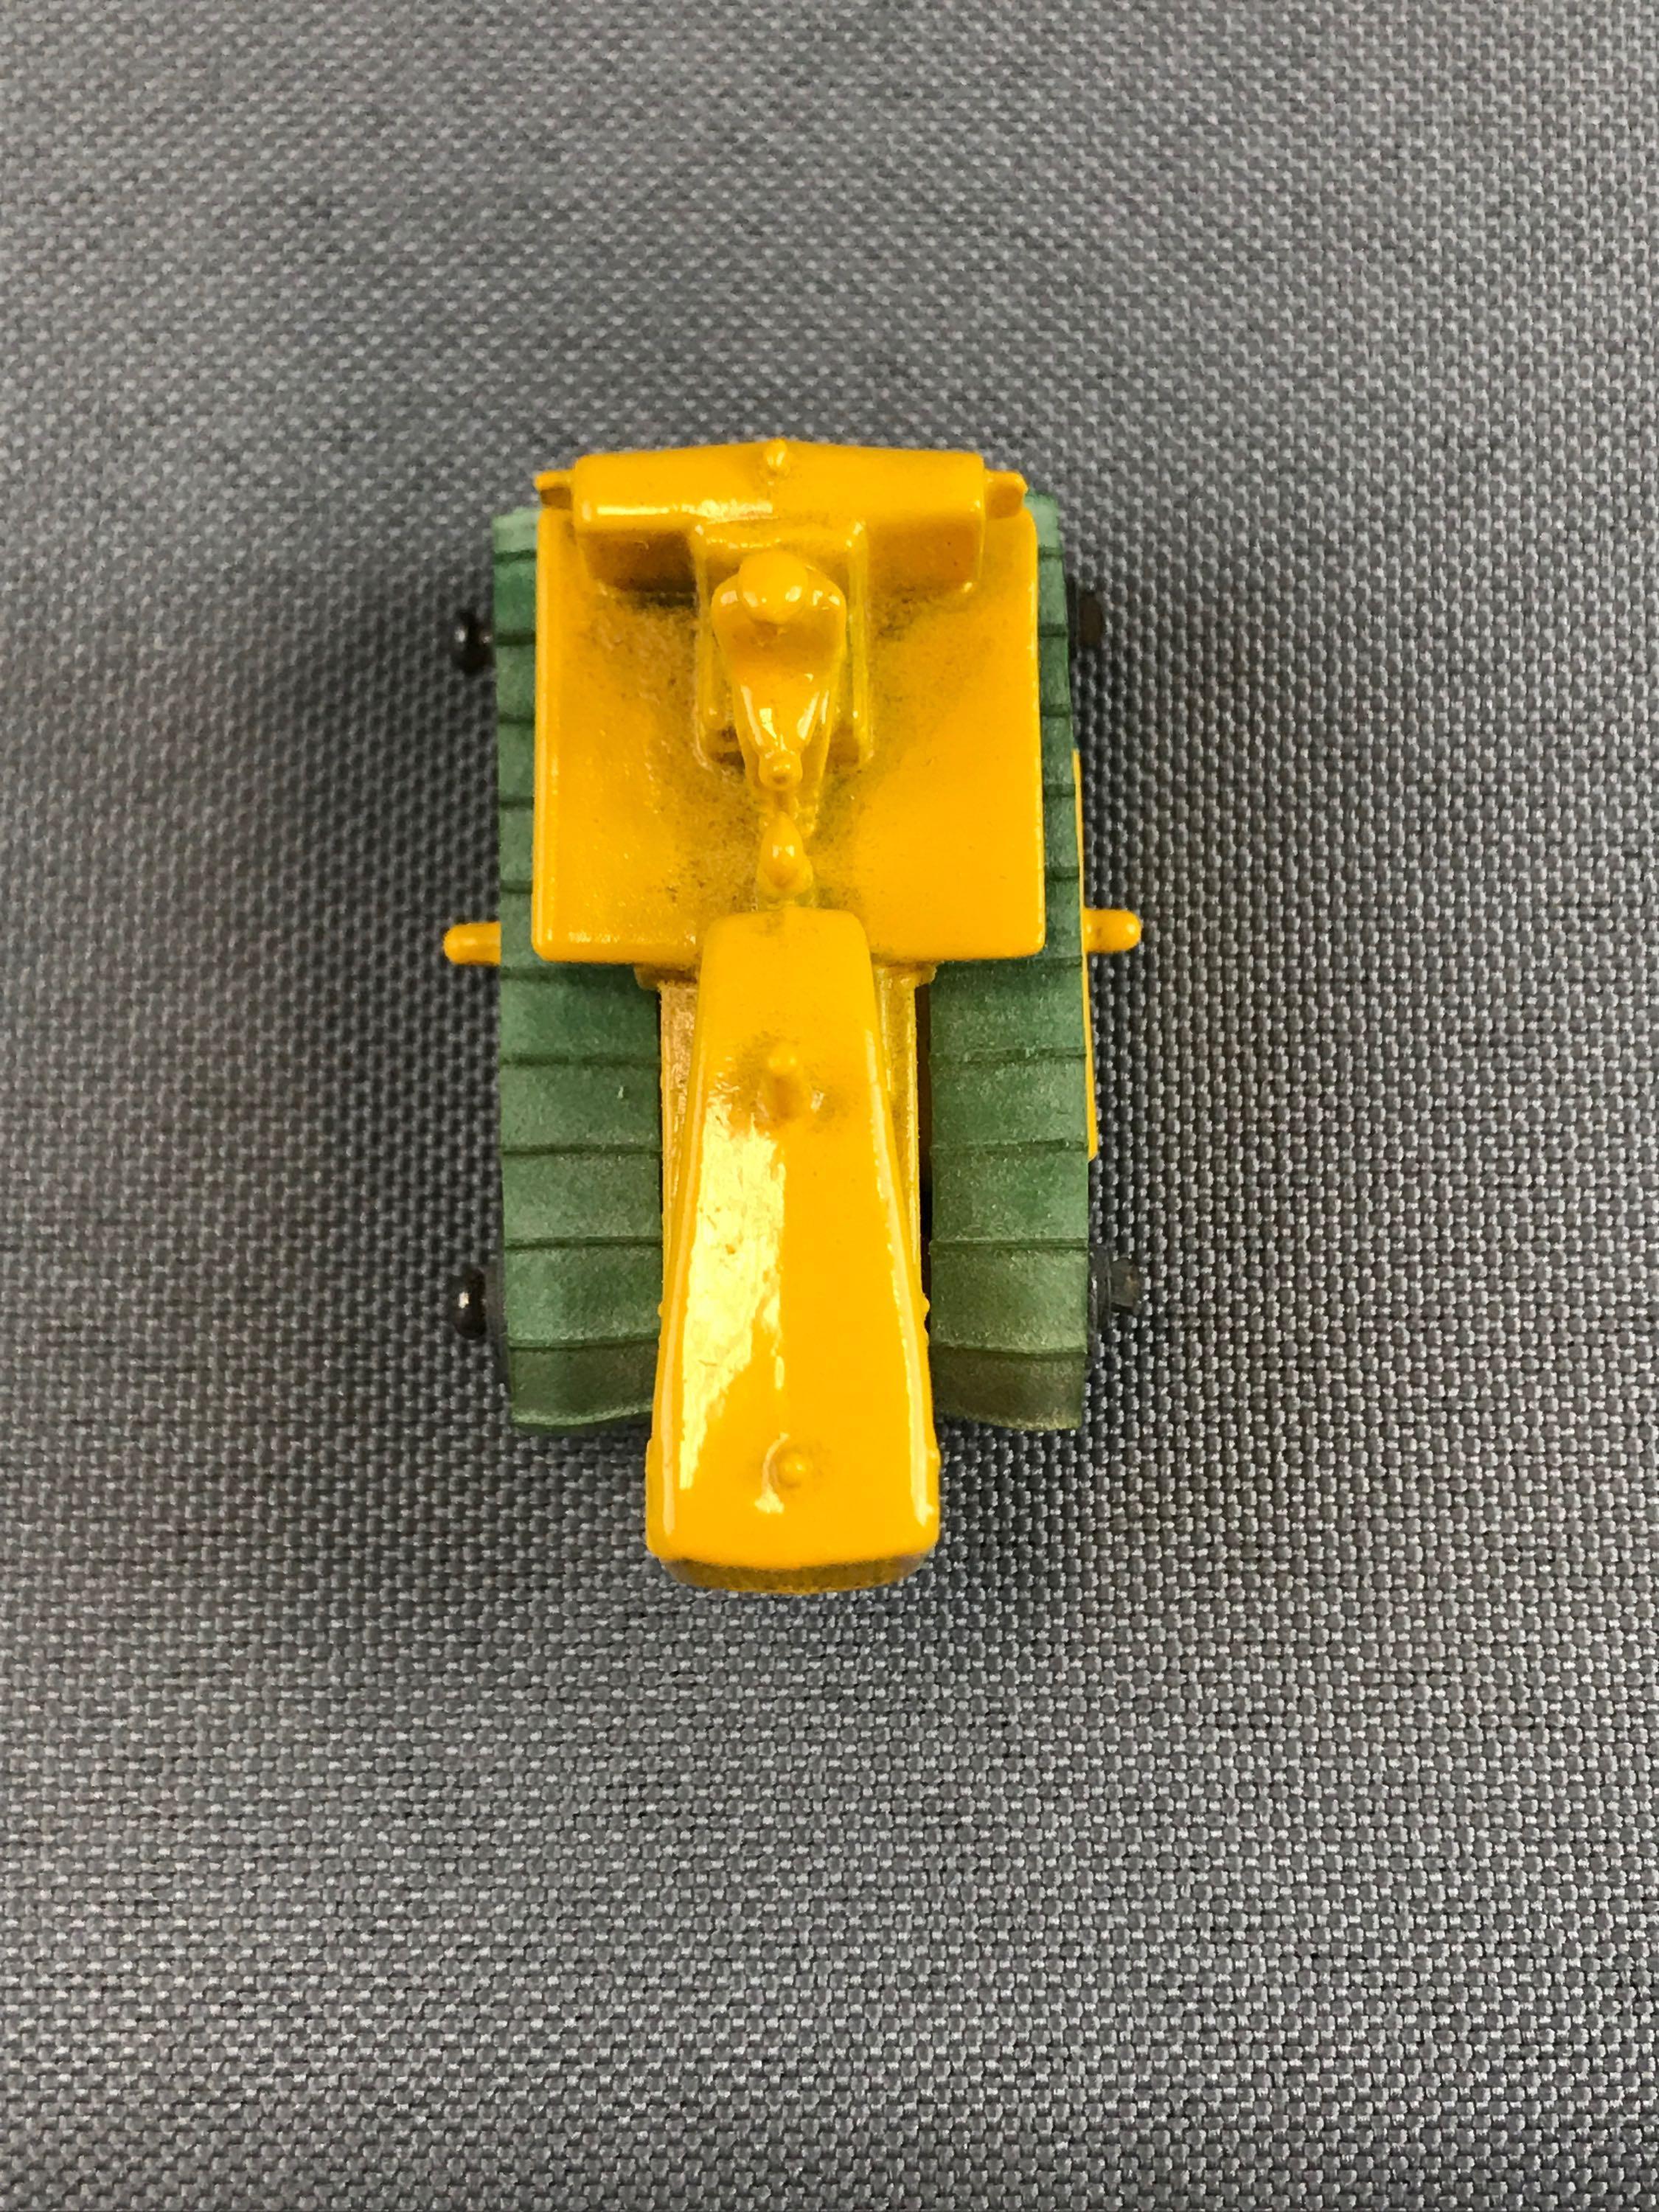 Matchbox No. 8 Caterpillar Tractor Die Cast Vehicle with Original Box